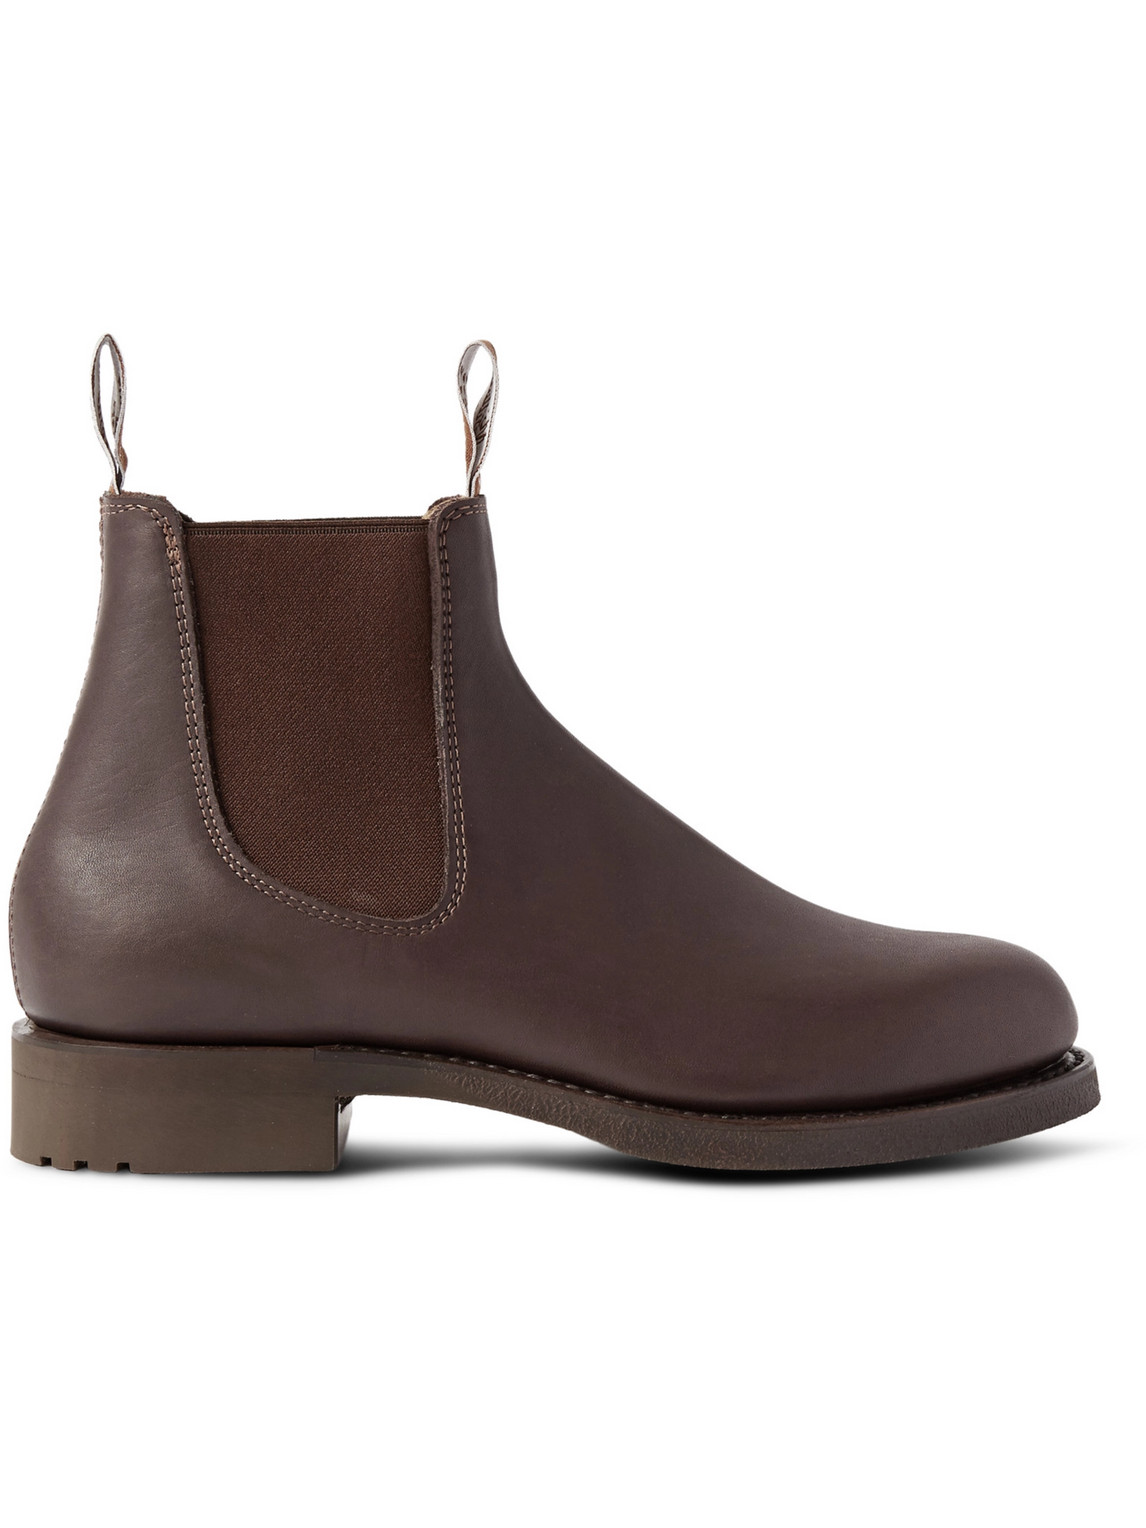 R.M.Williams - Gardener Whole-Cut Leather Chelsea Boots - Men - Brown - UK 10.5 von R.M.Williams